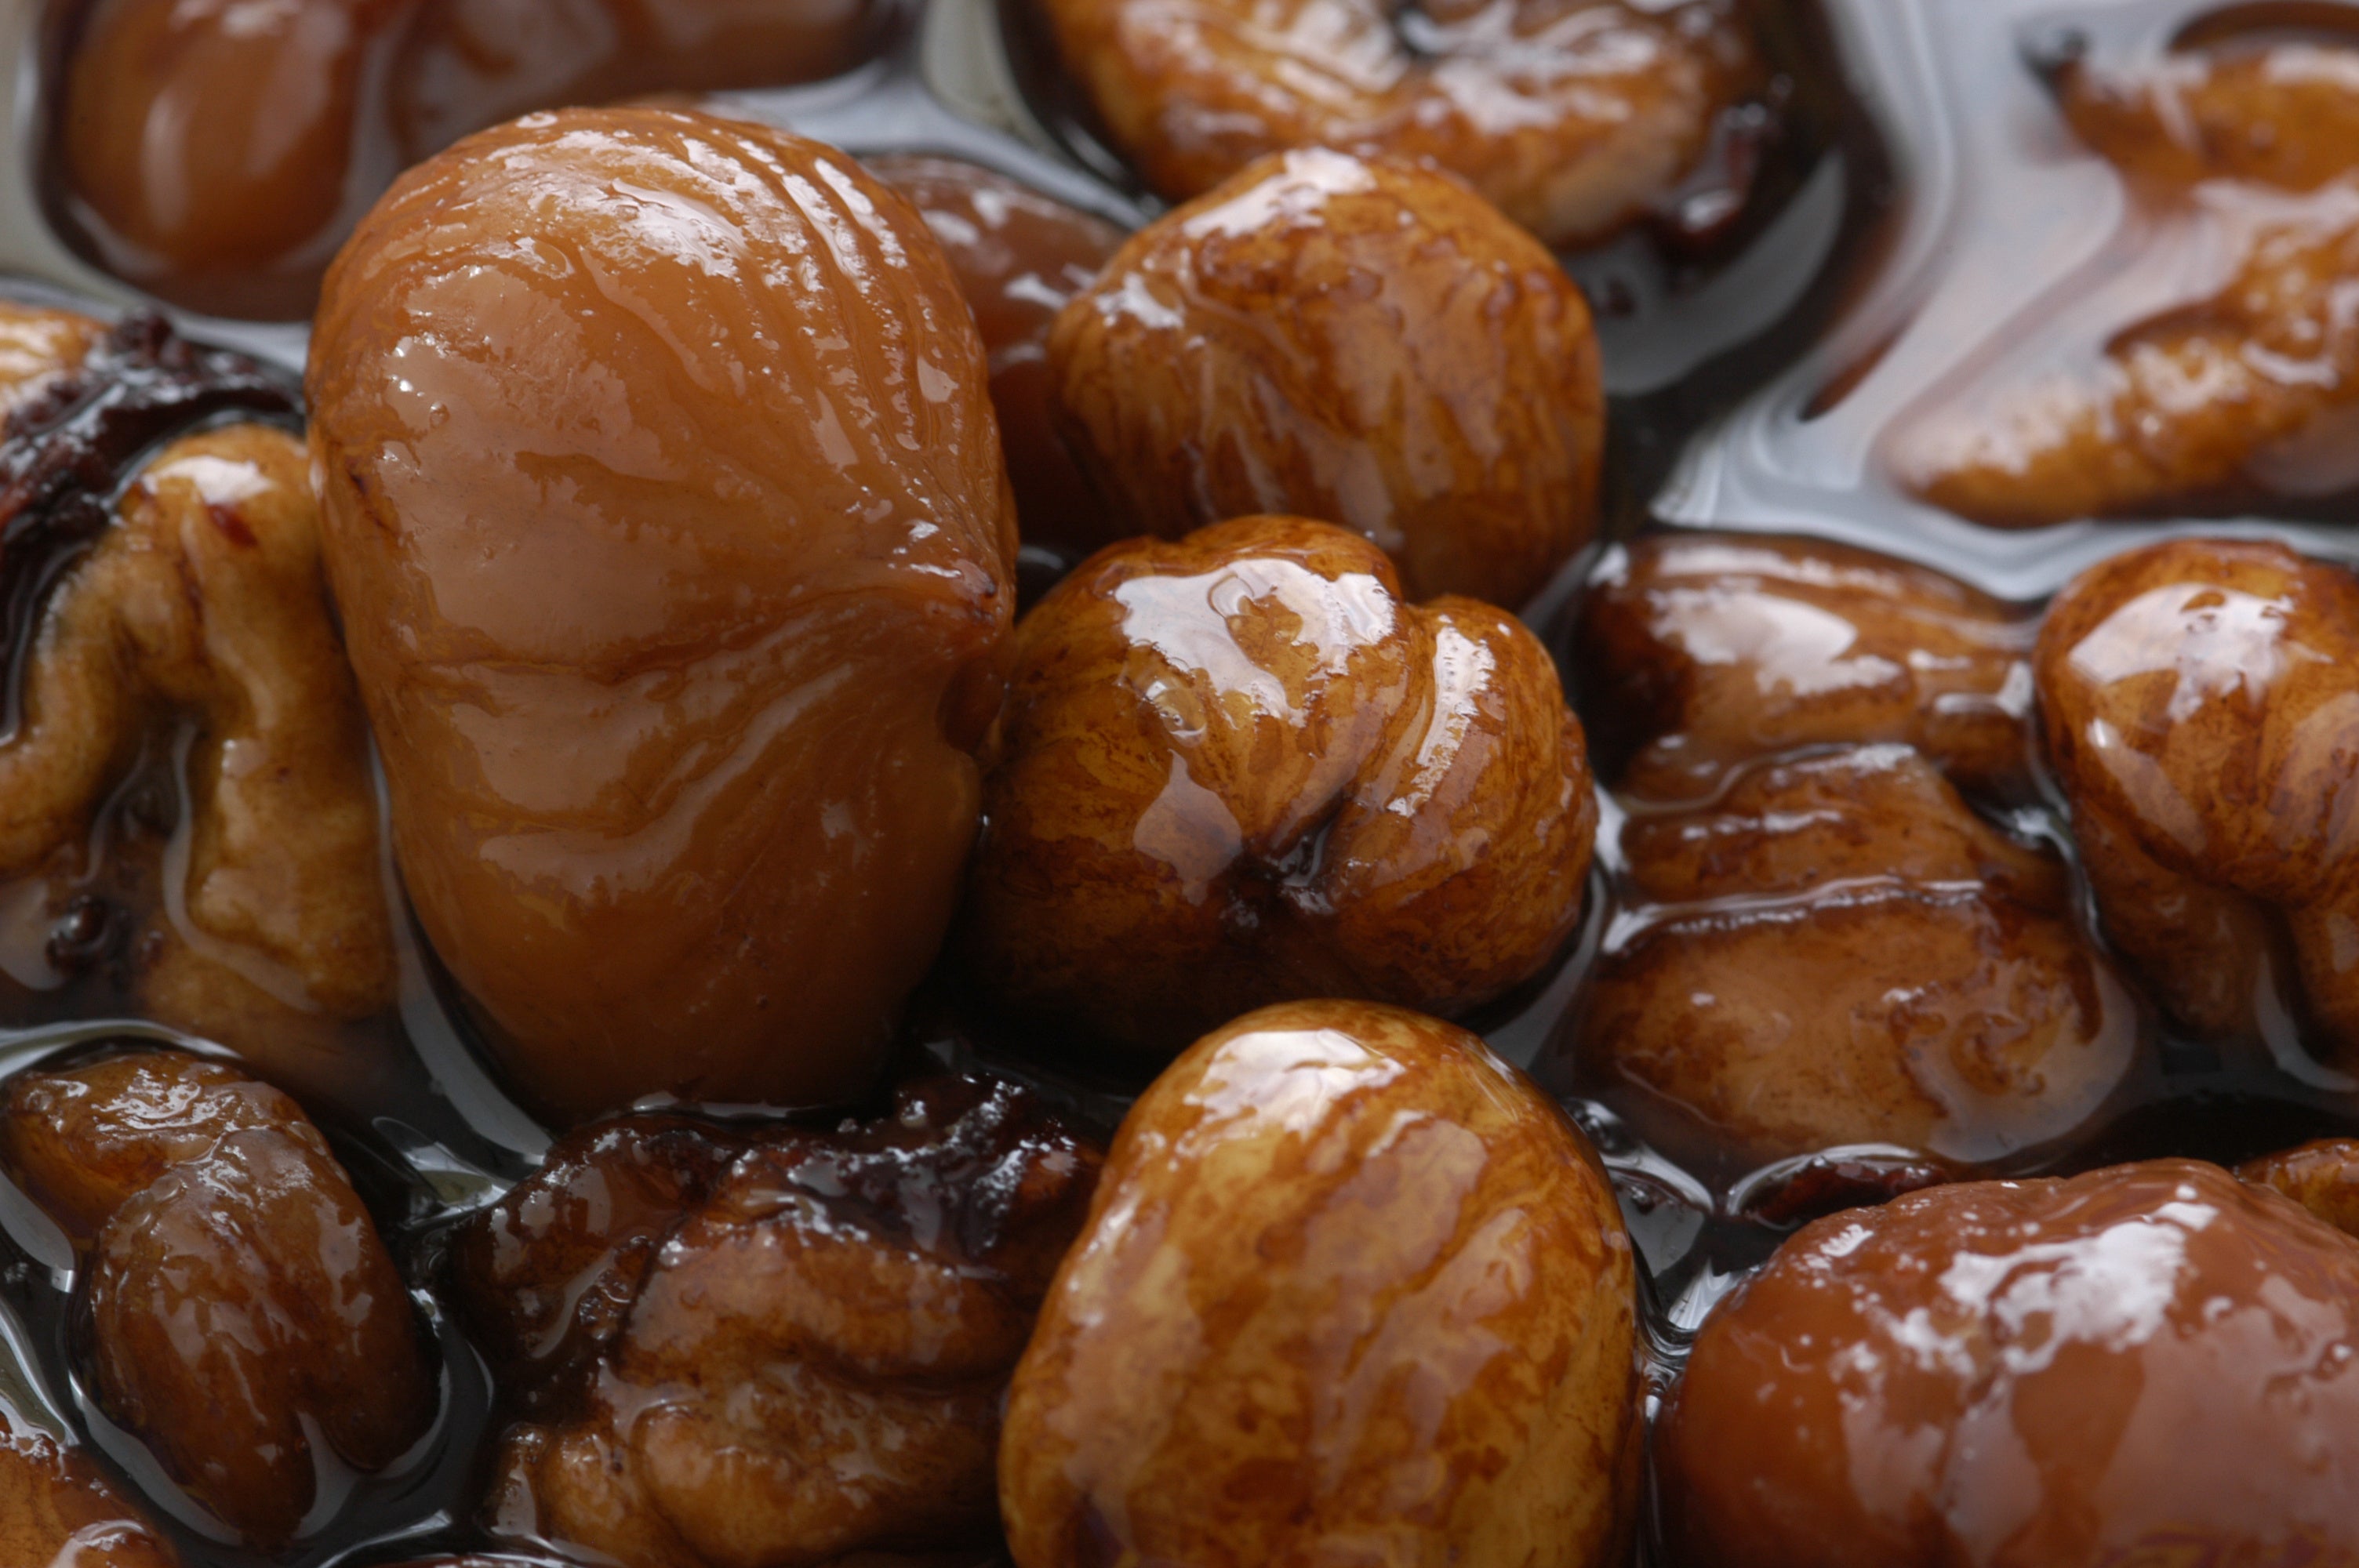 Marron Glacé - Candied Chestnut Treats, Recipe